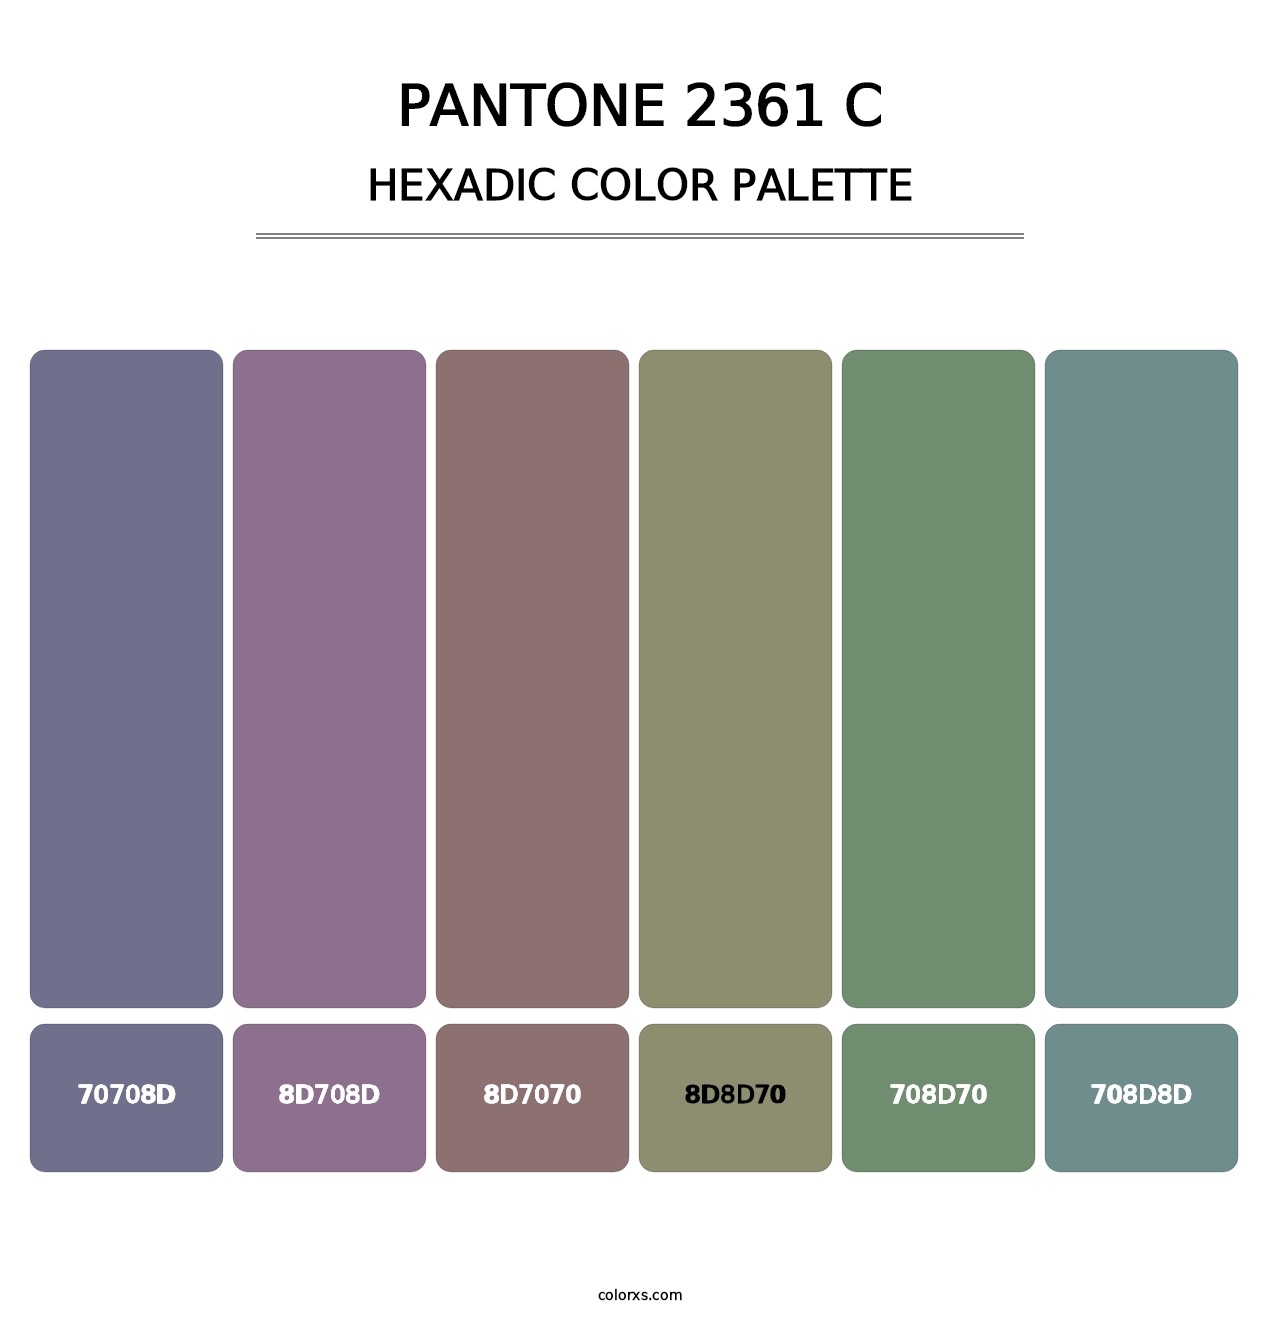 PANTONE 2361 C - Hexadic Color Palette